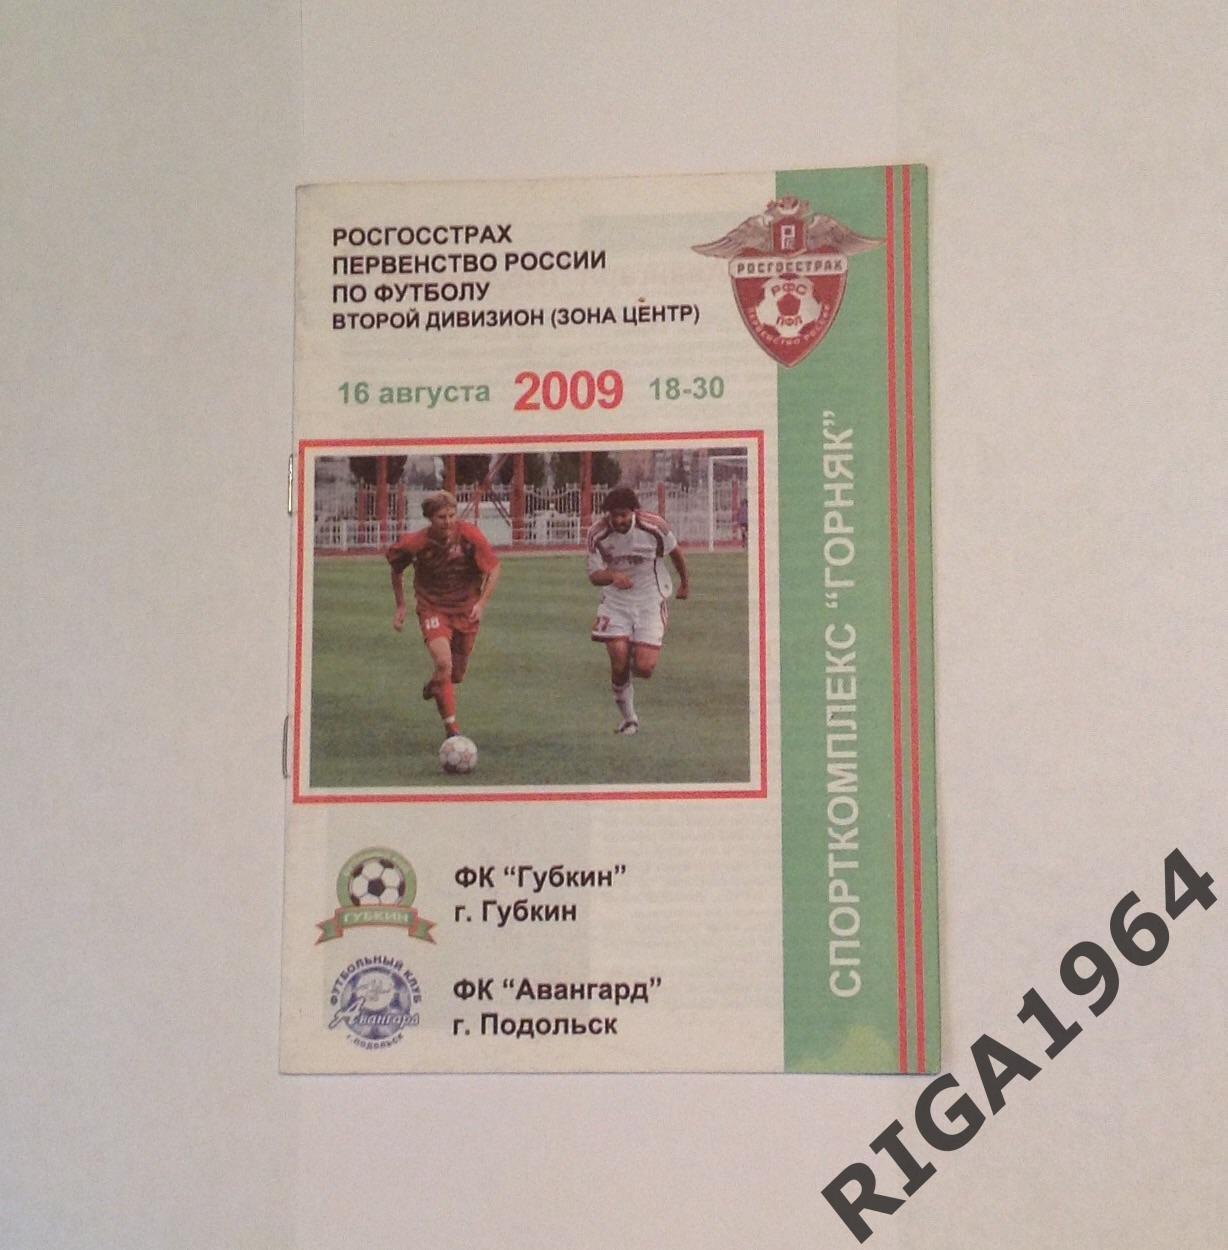 Сезон 2009 ФКГубкин Губкин-Авангард Подольск (2-й дивизион)